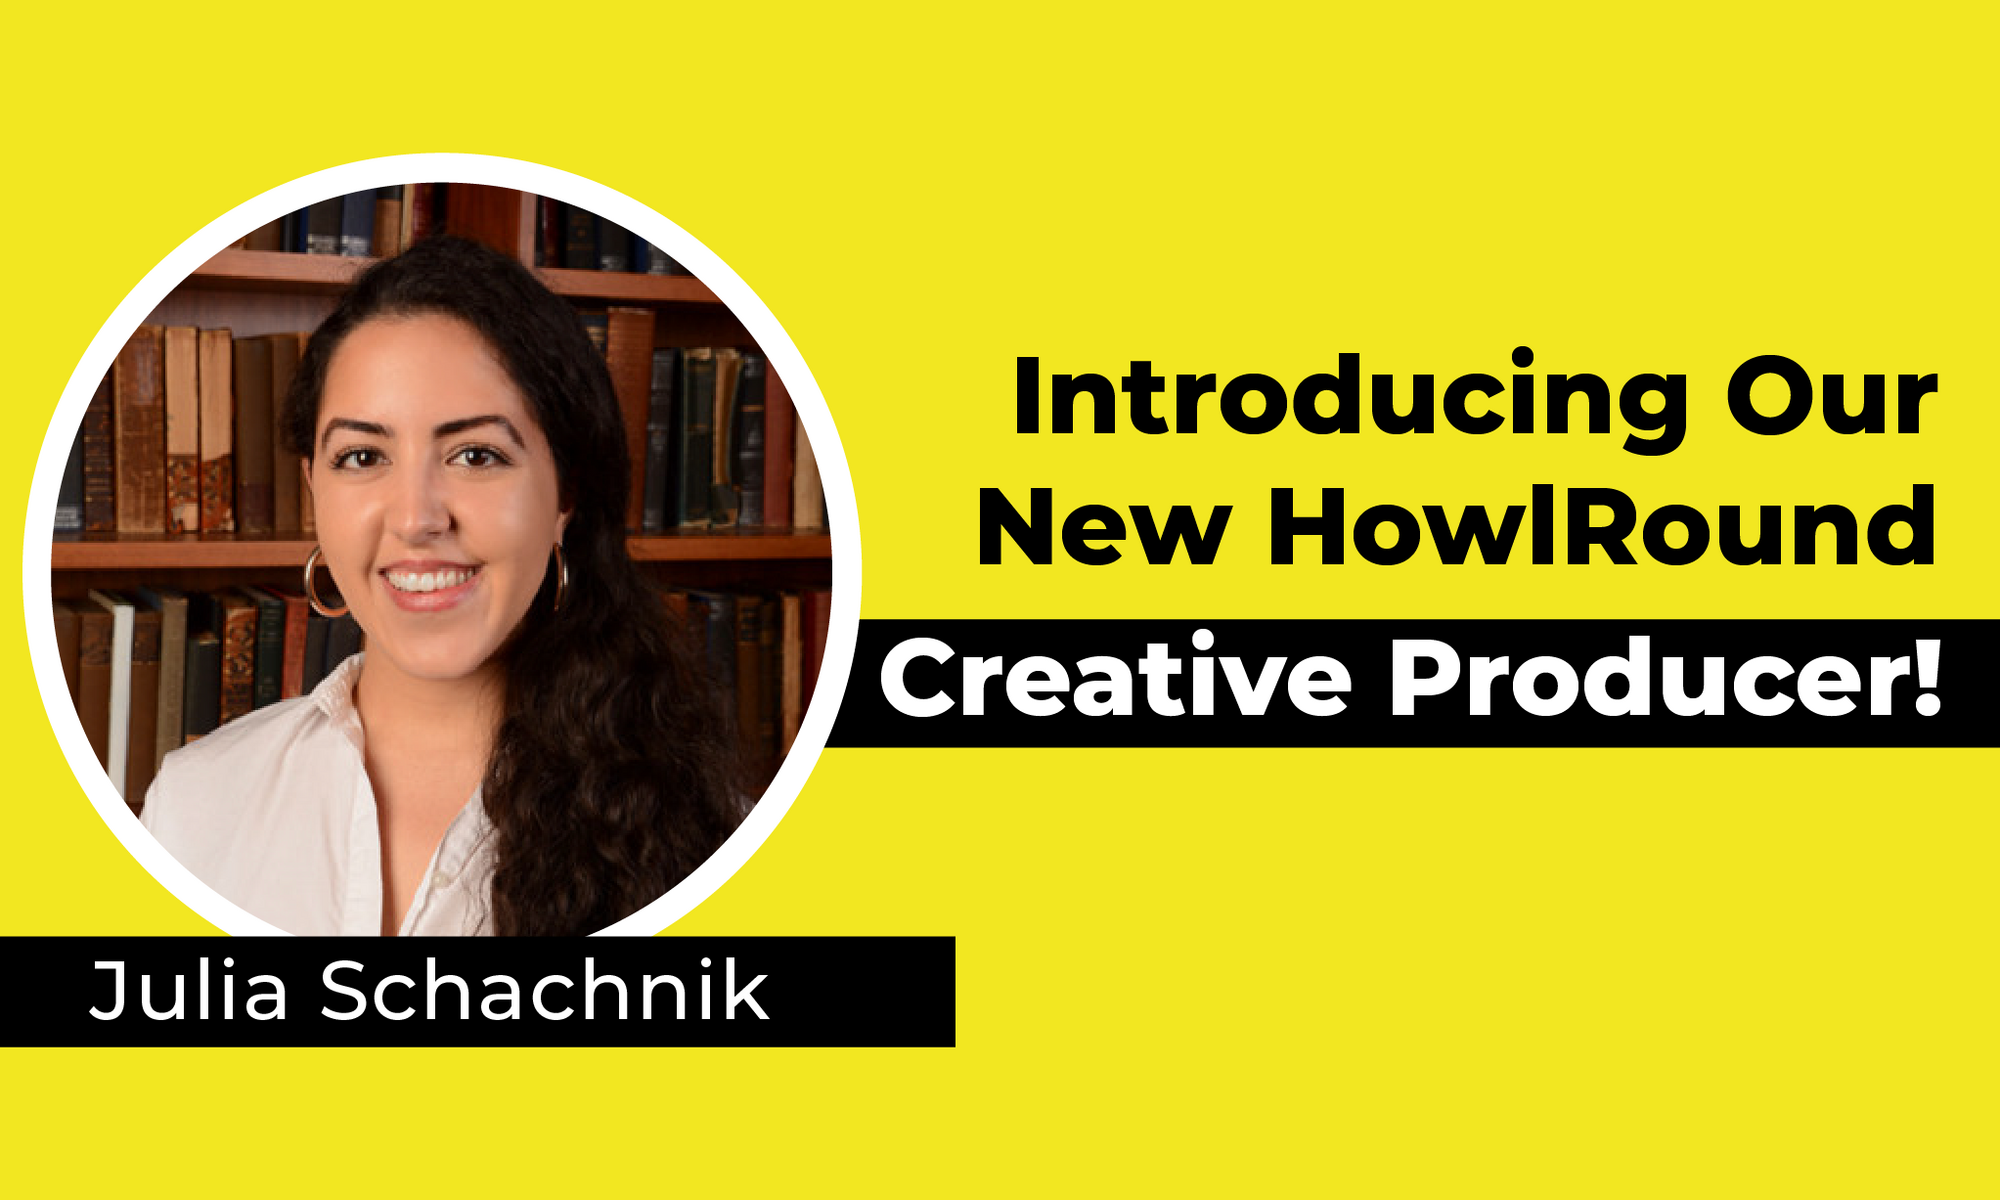 Introducing our new HowlRound Creative Producer, Julia Schachnik